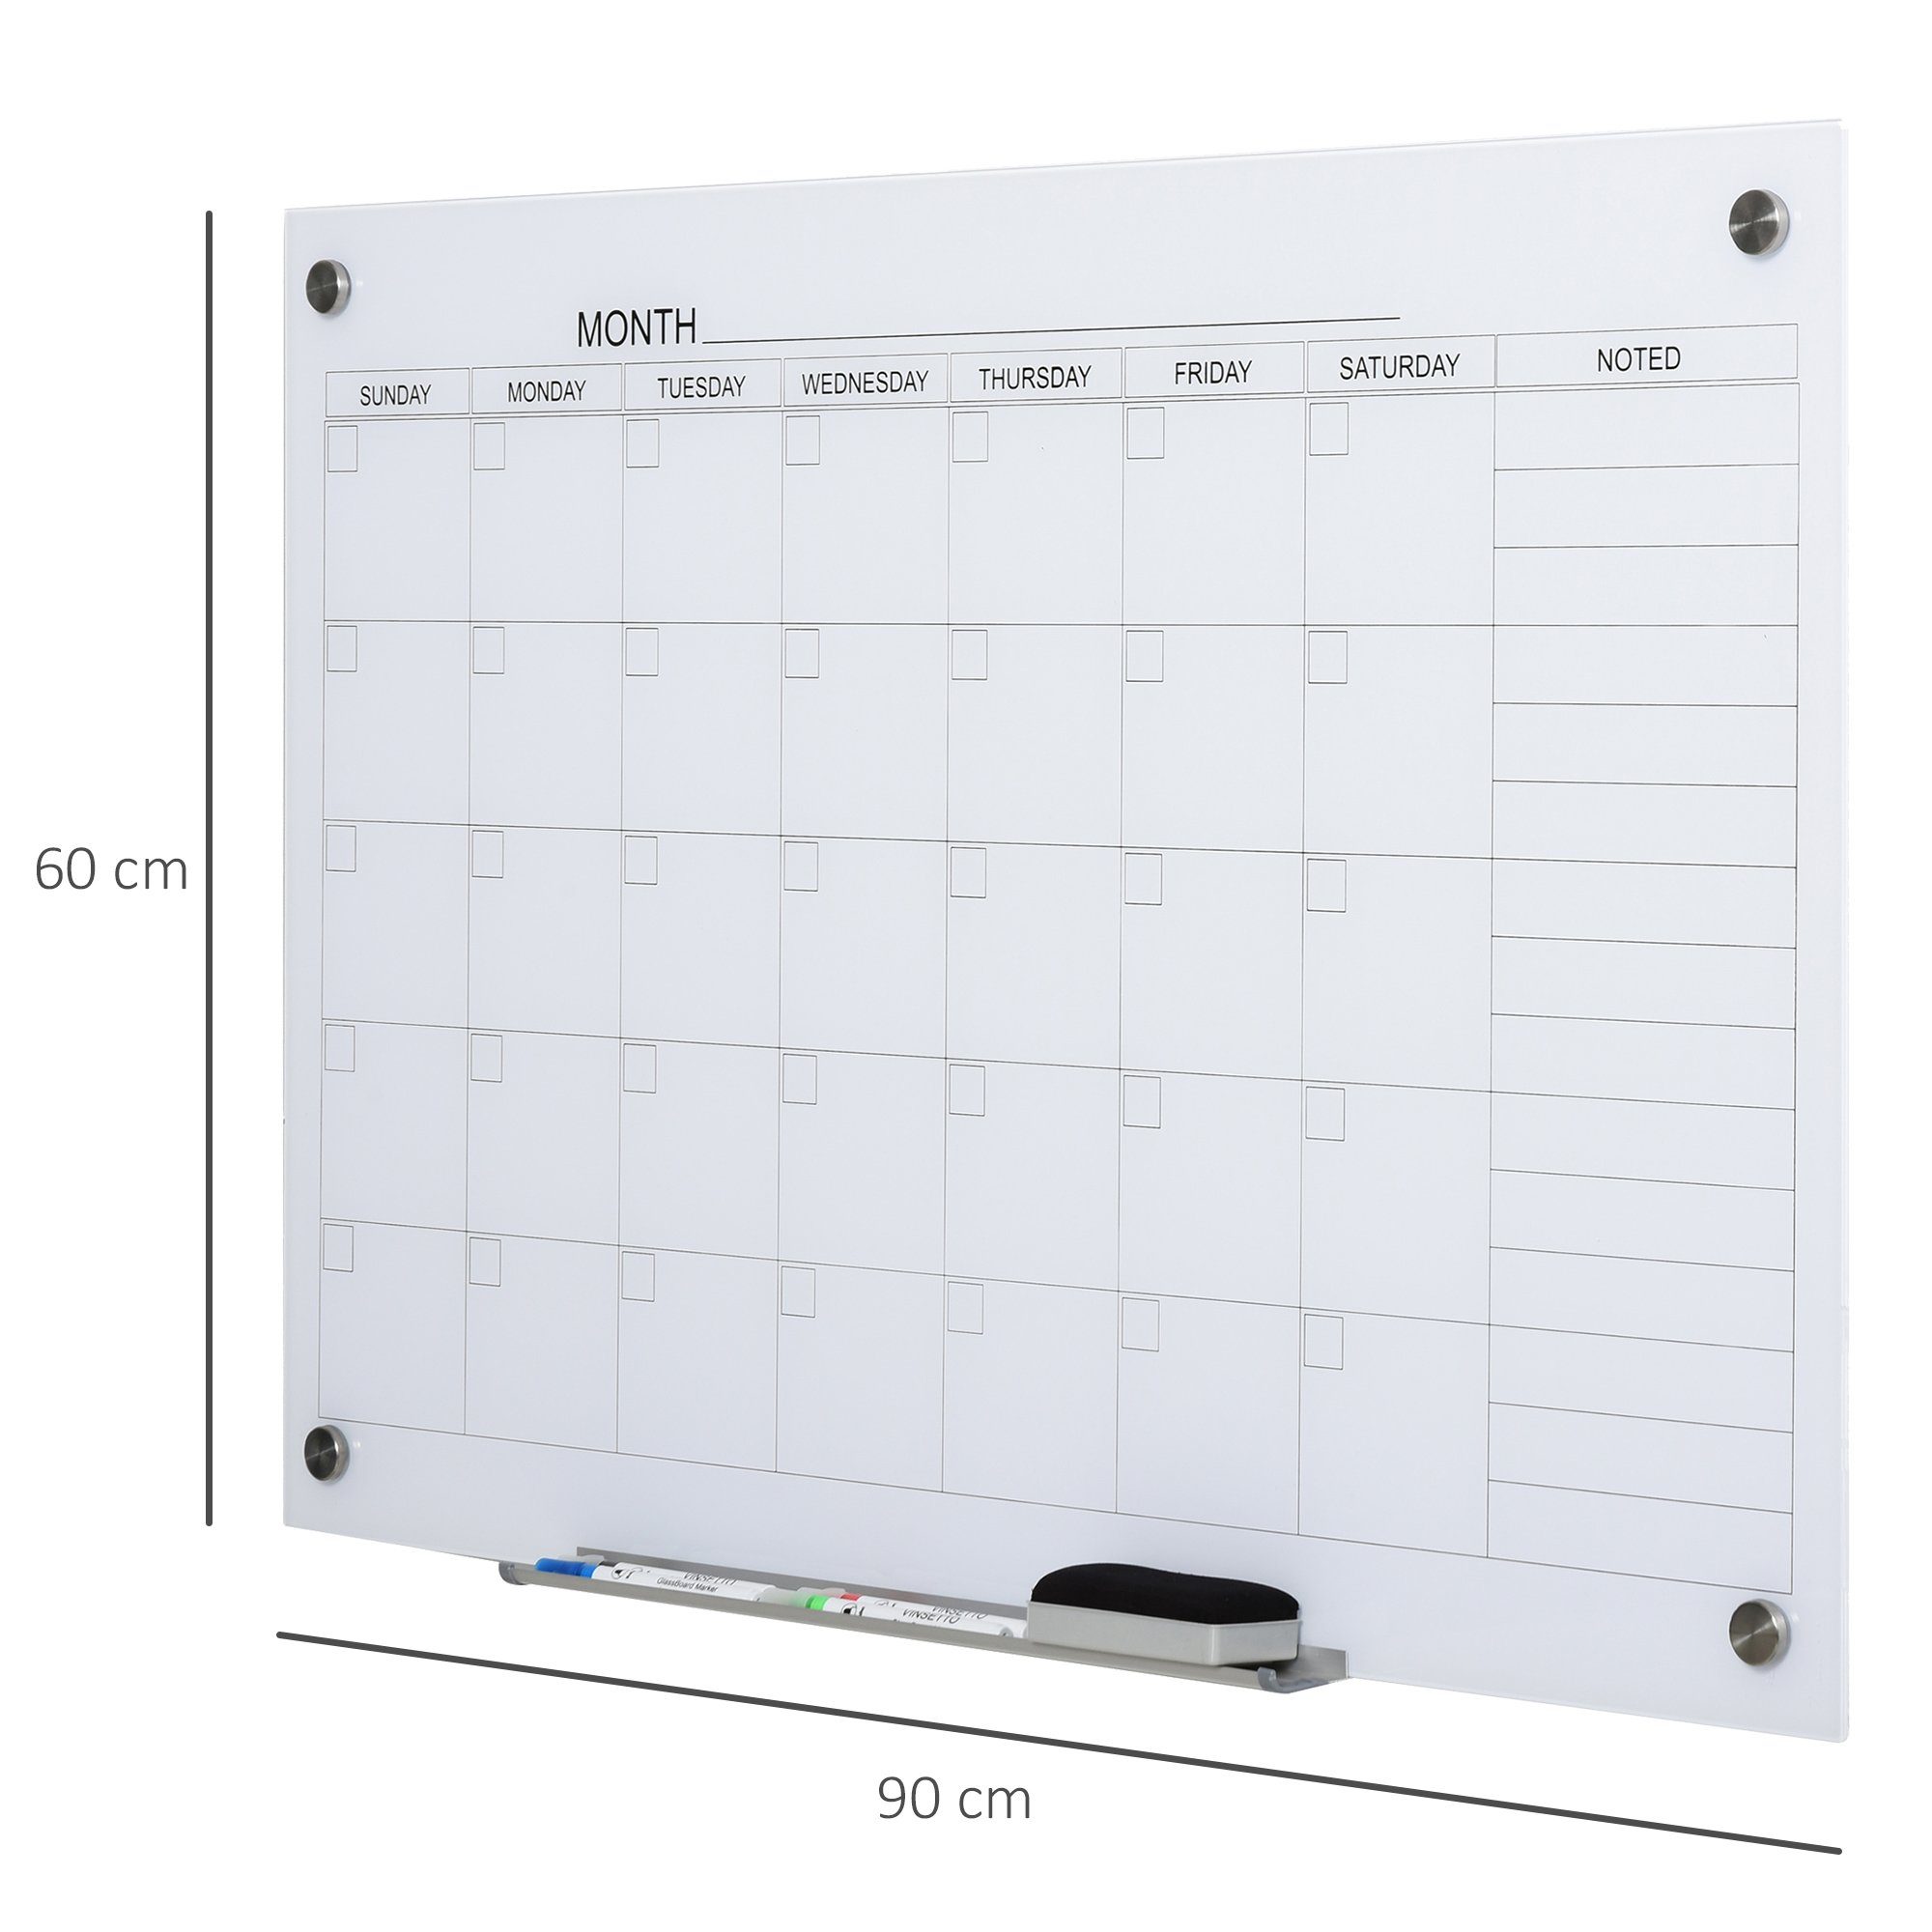 Vinsetto Memoboard Kalendertafel, Glasclip Glasplatte Zeitplan (Set, Kalendertafel), 4 1-tlg., Weiß mit Planungstafel